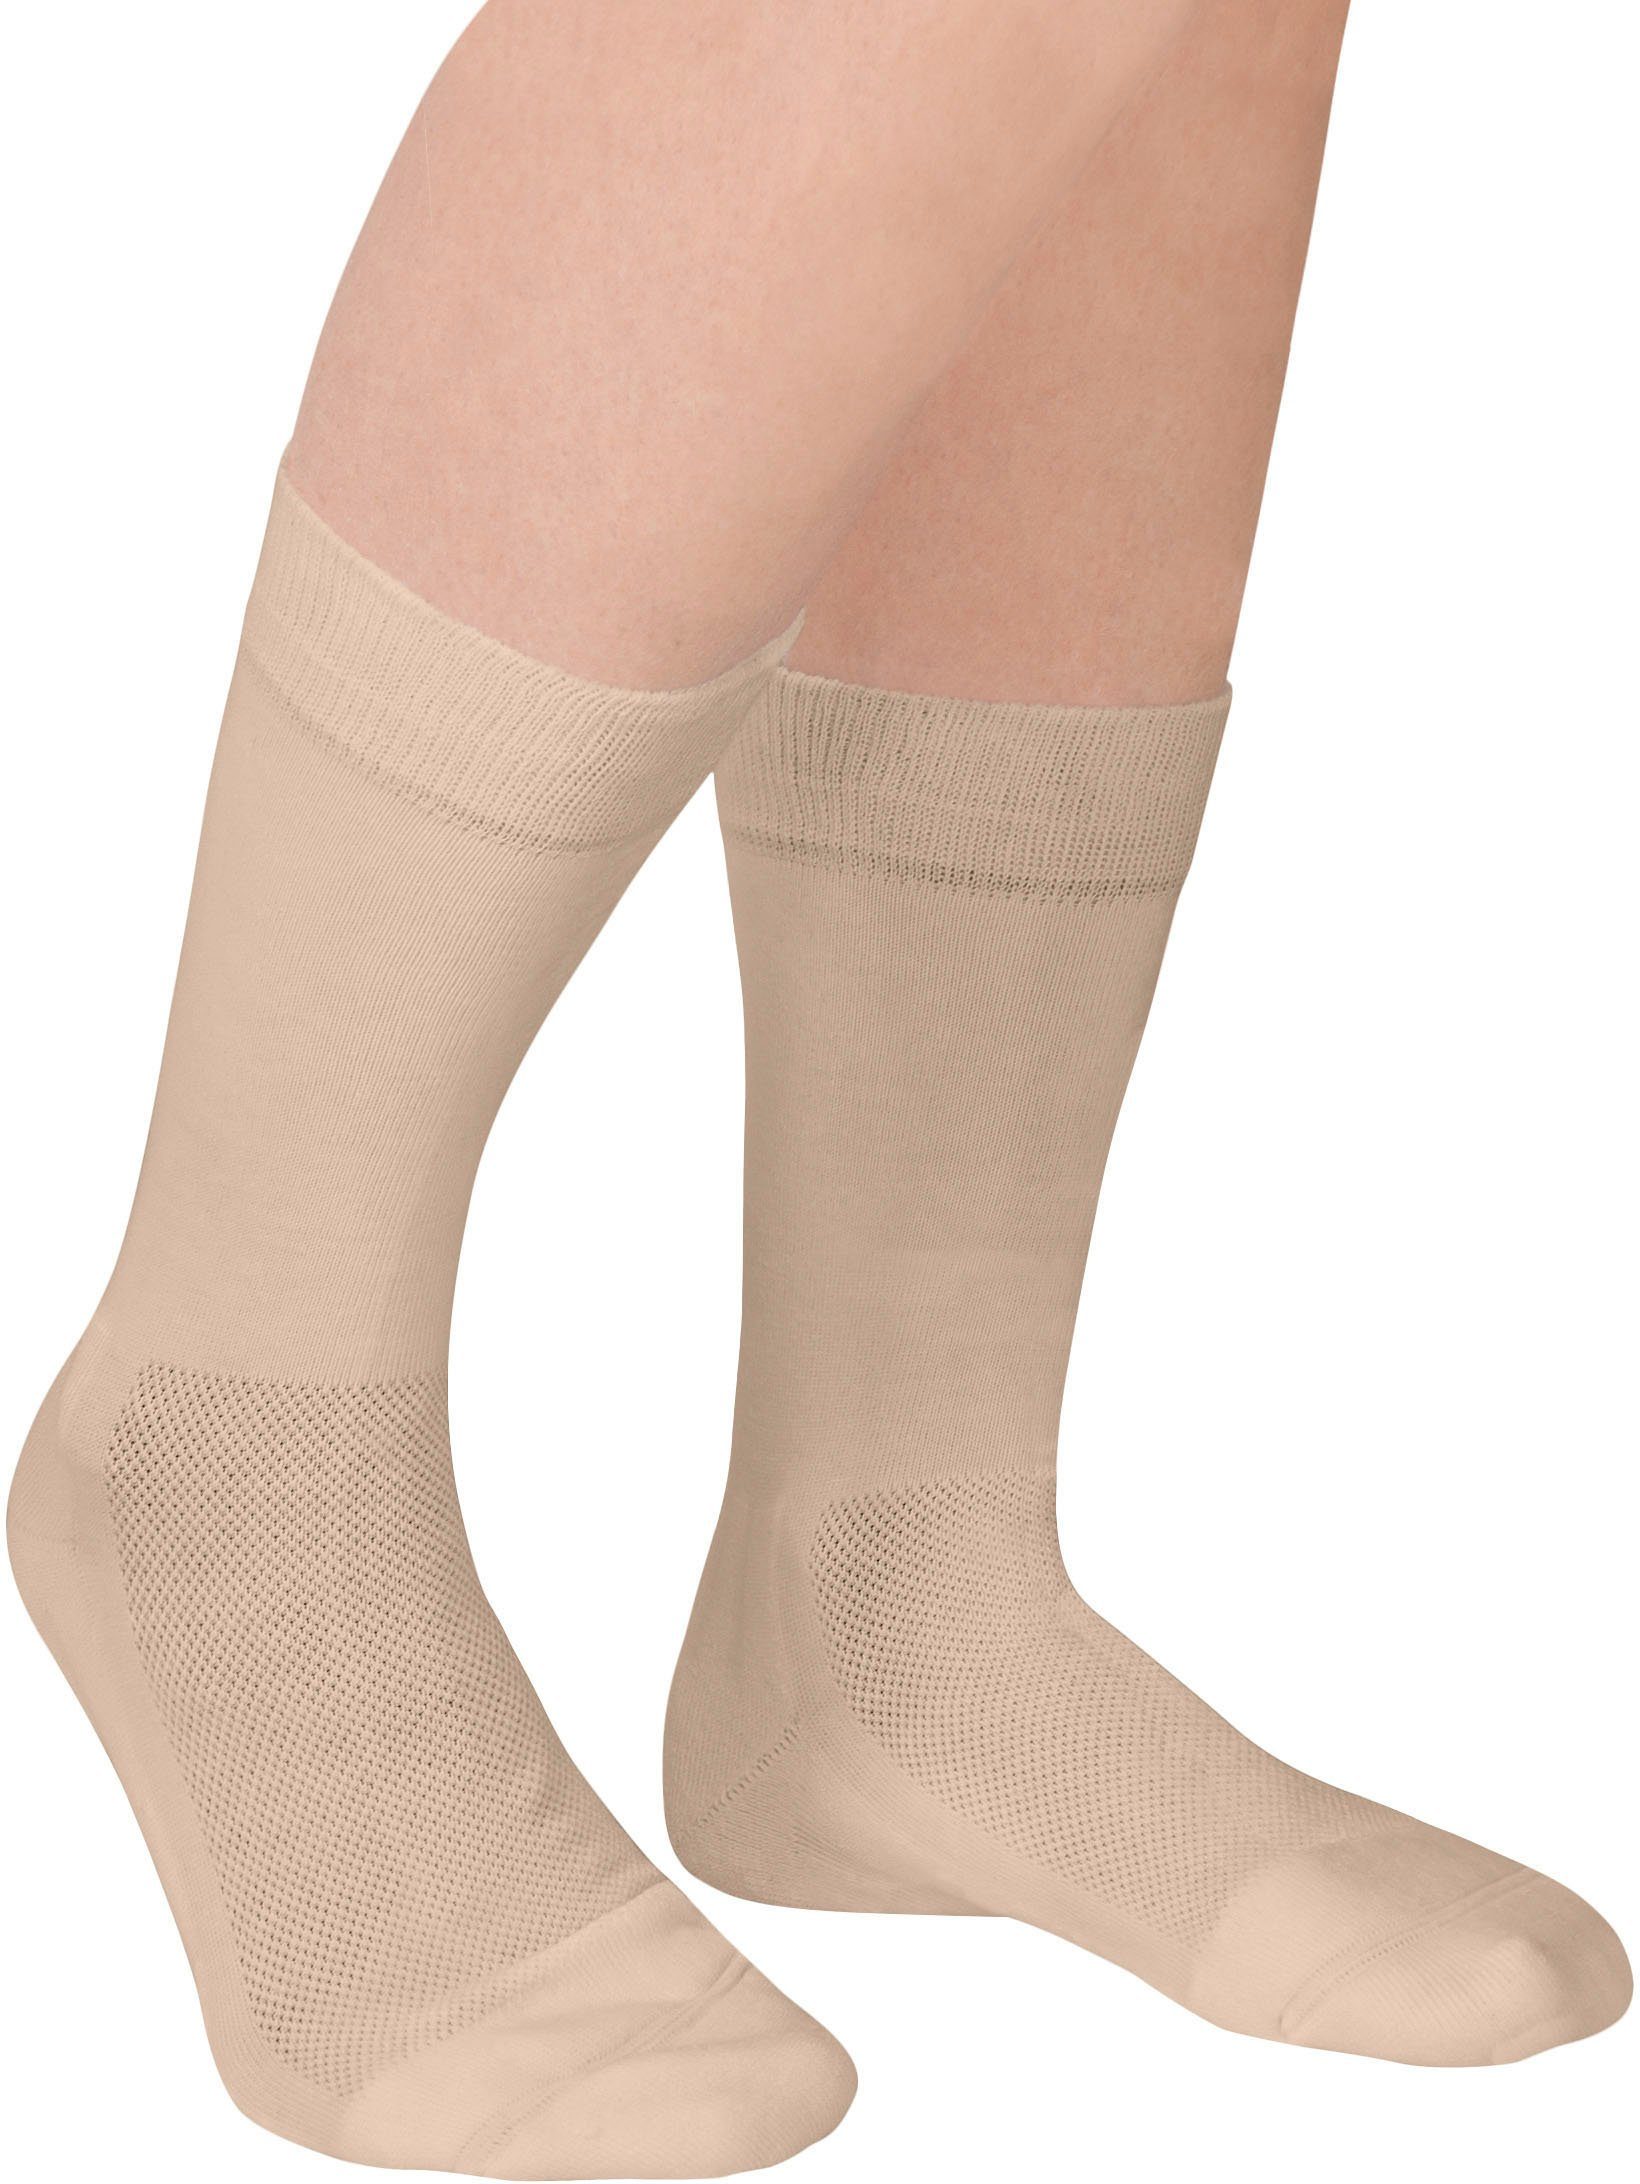 Diabetikersocken Fußgut beige Venenfeund (2-Paar) Socken Sensitiv